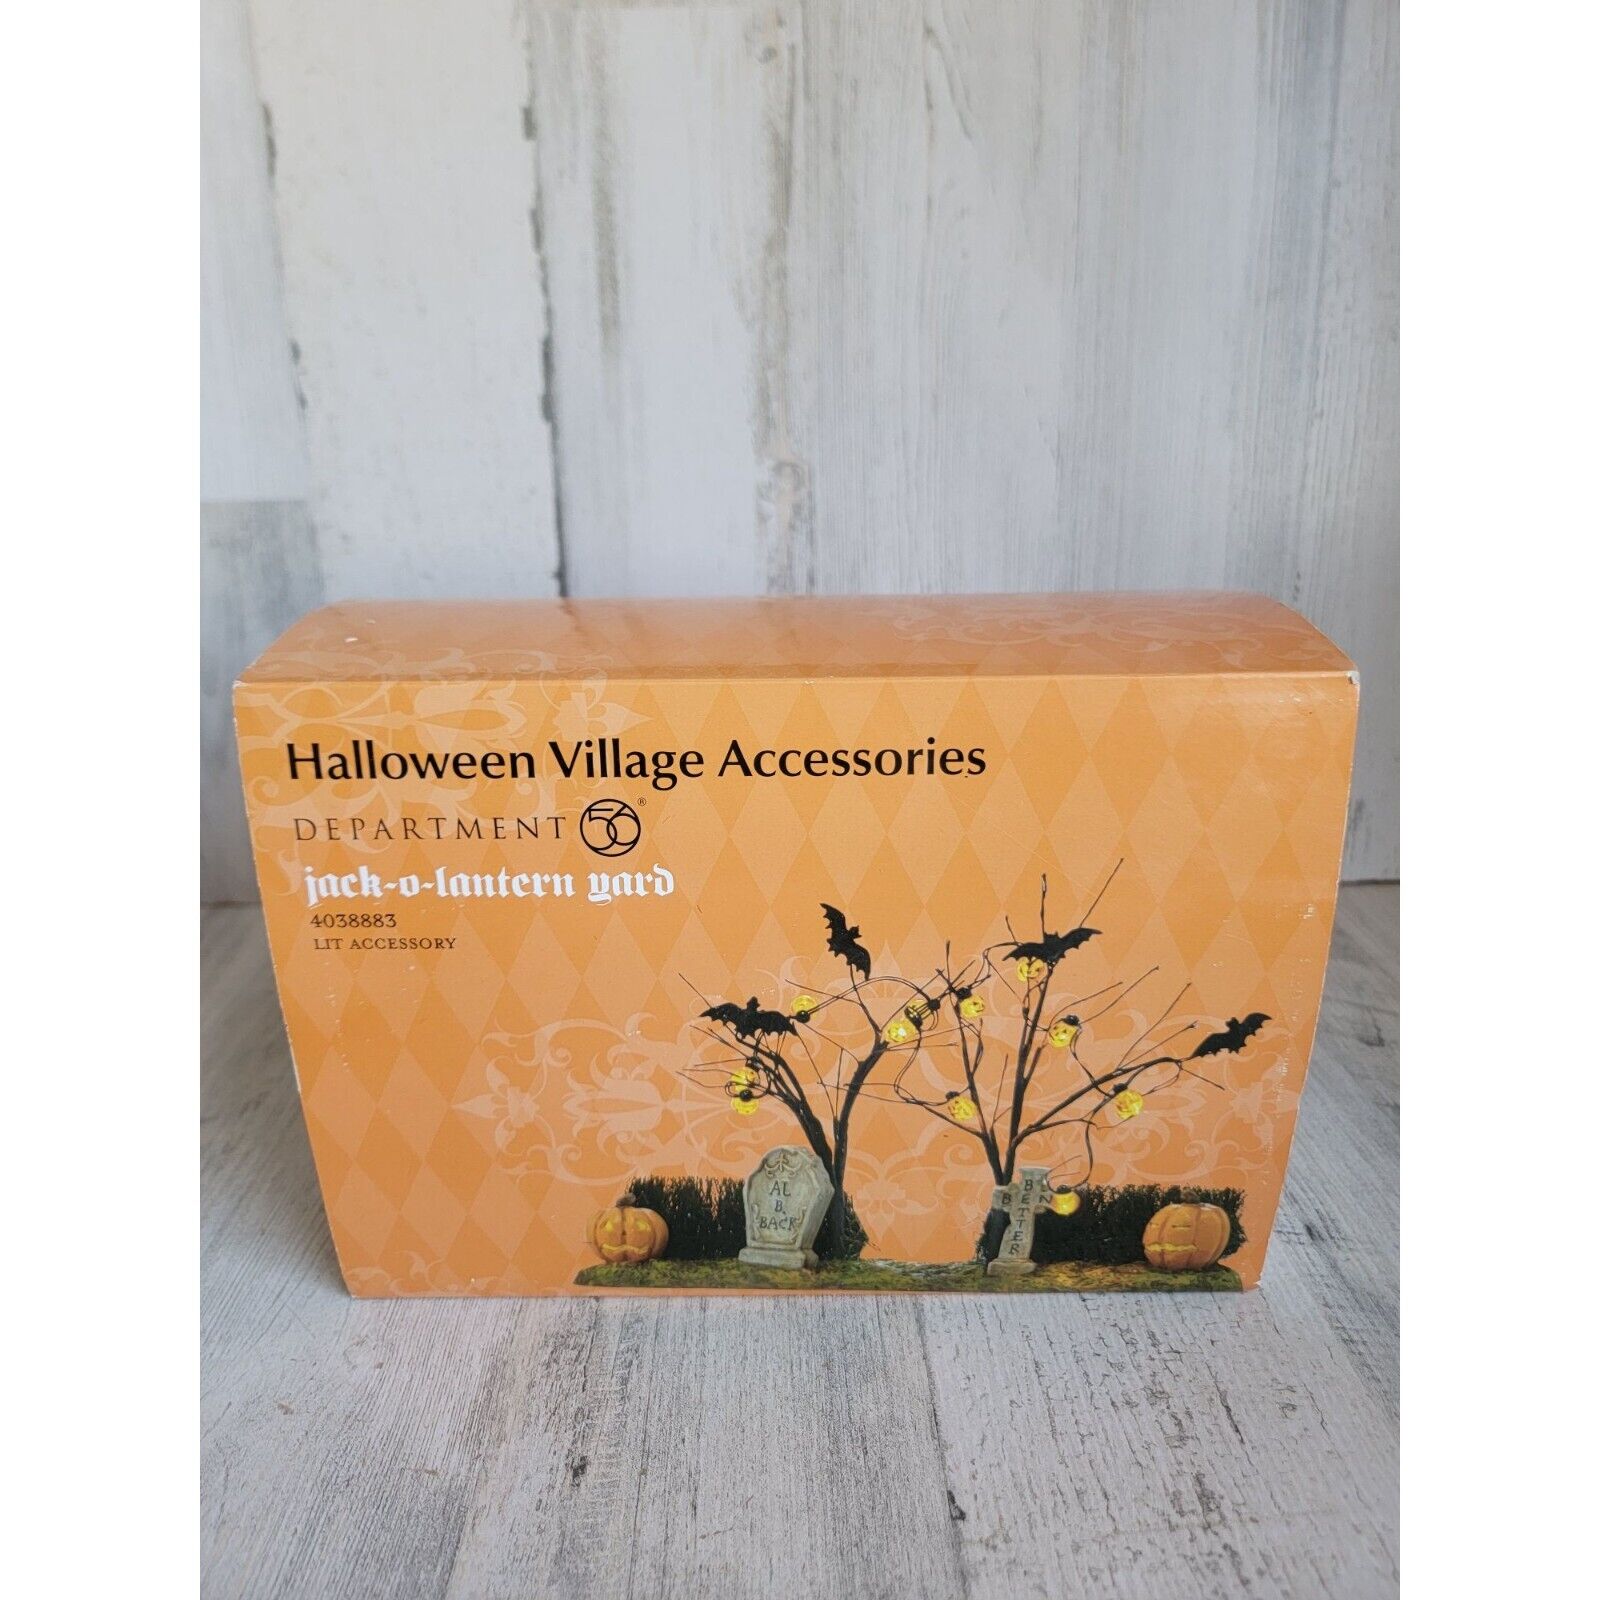 Dept 56 4038883 jack-o-lantern Halloween Village accessory